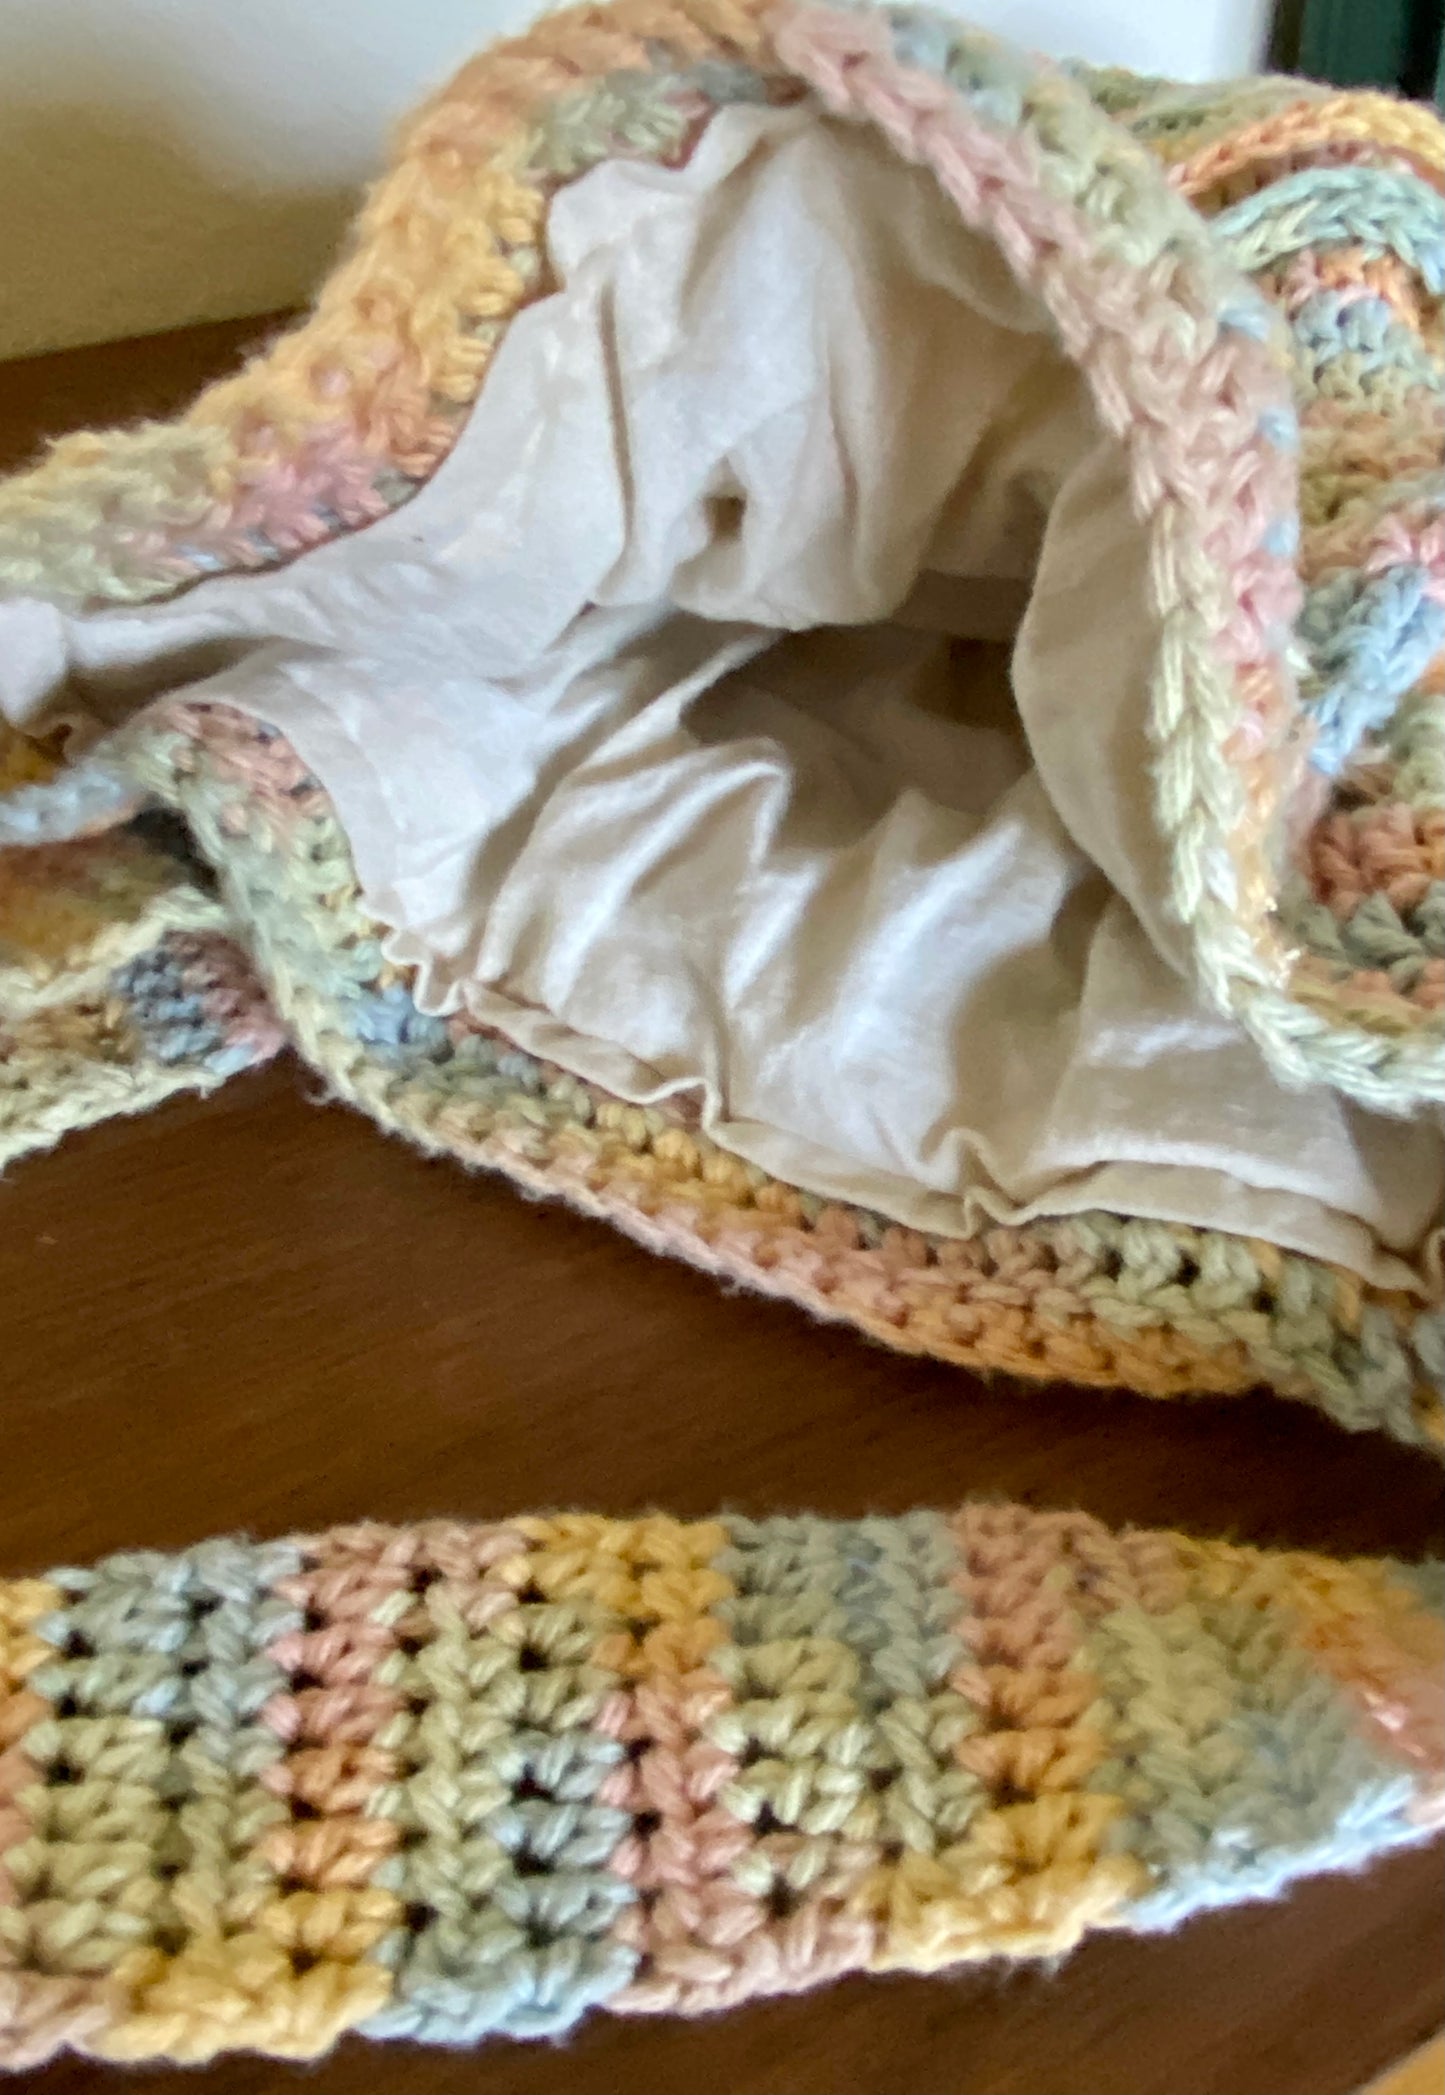 Crochet Sling Bag ~Pastel Color Cotton W/cotton liner -All Handmade